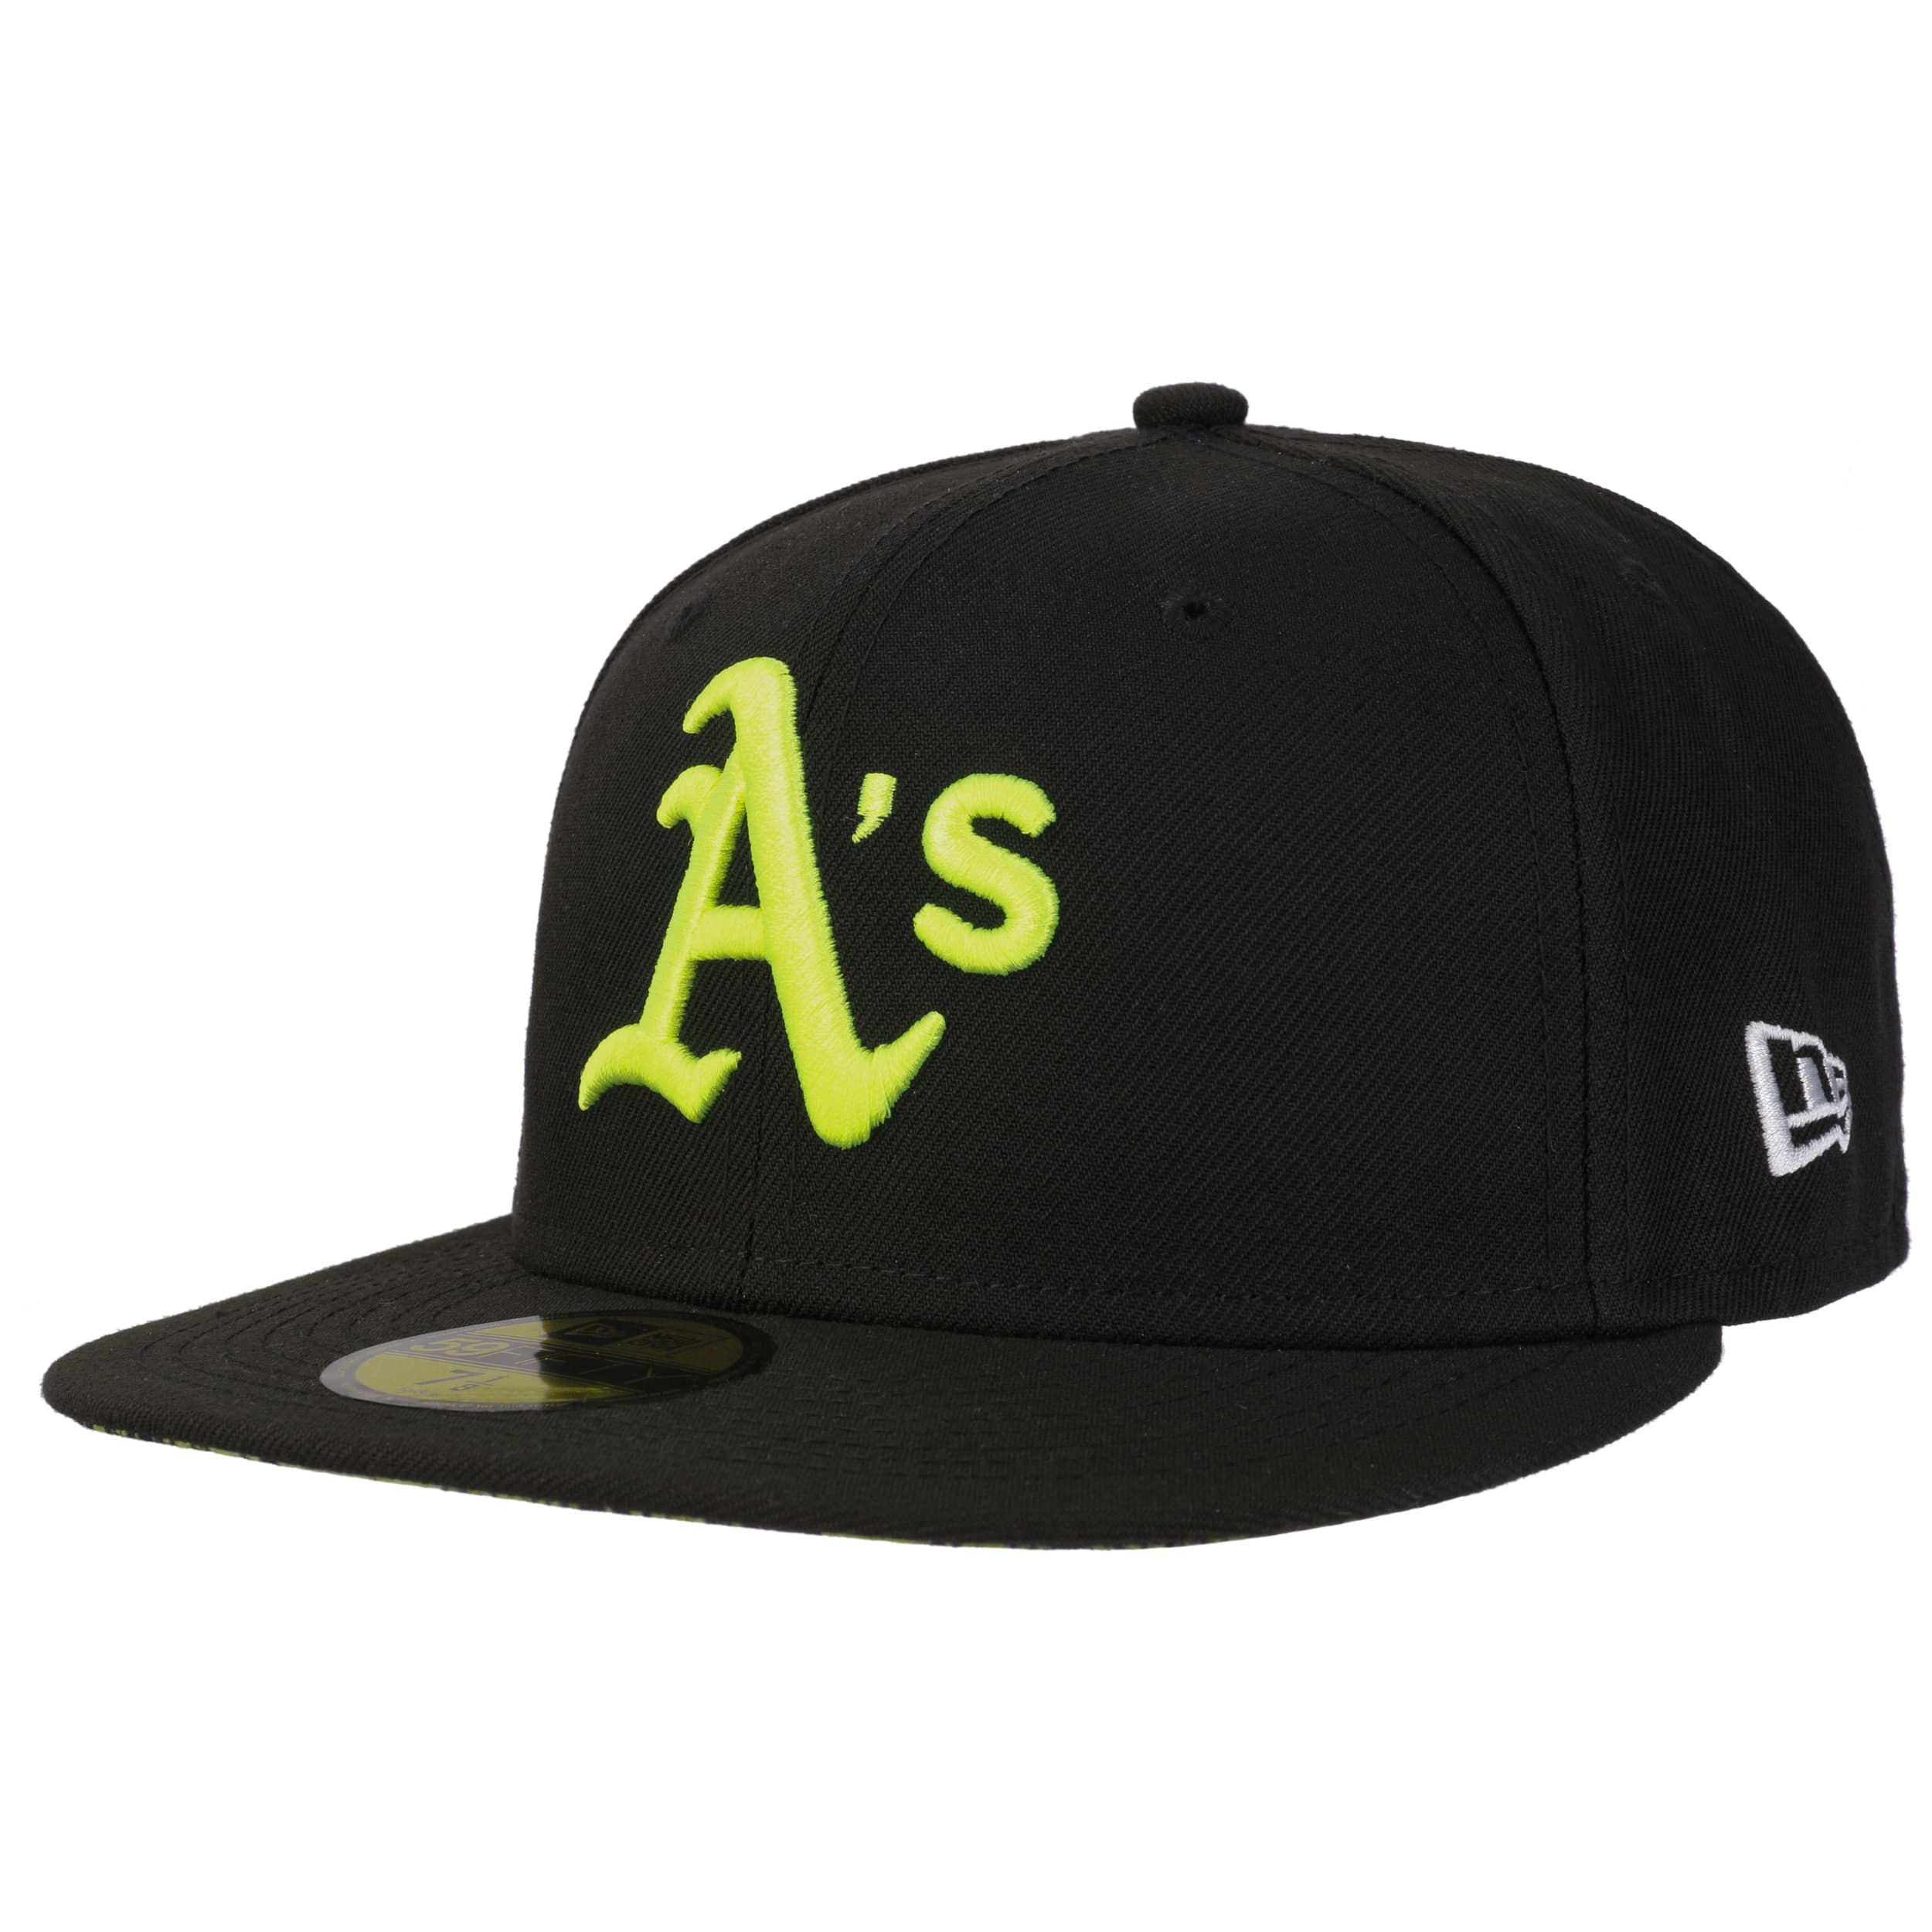 MLB Hat